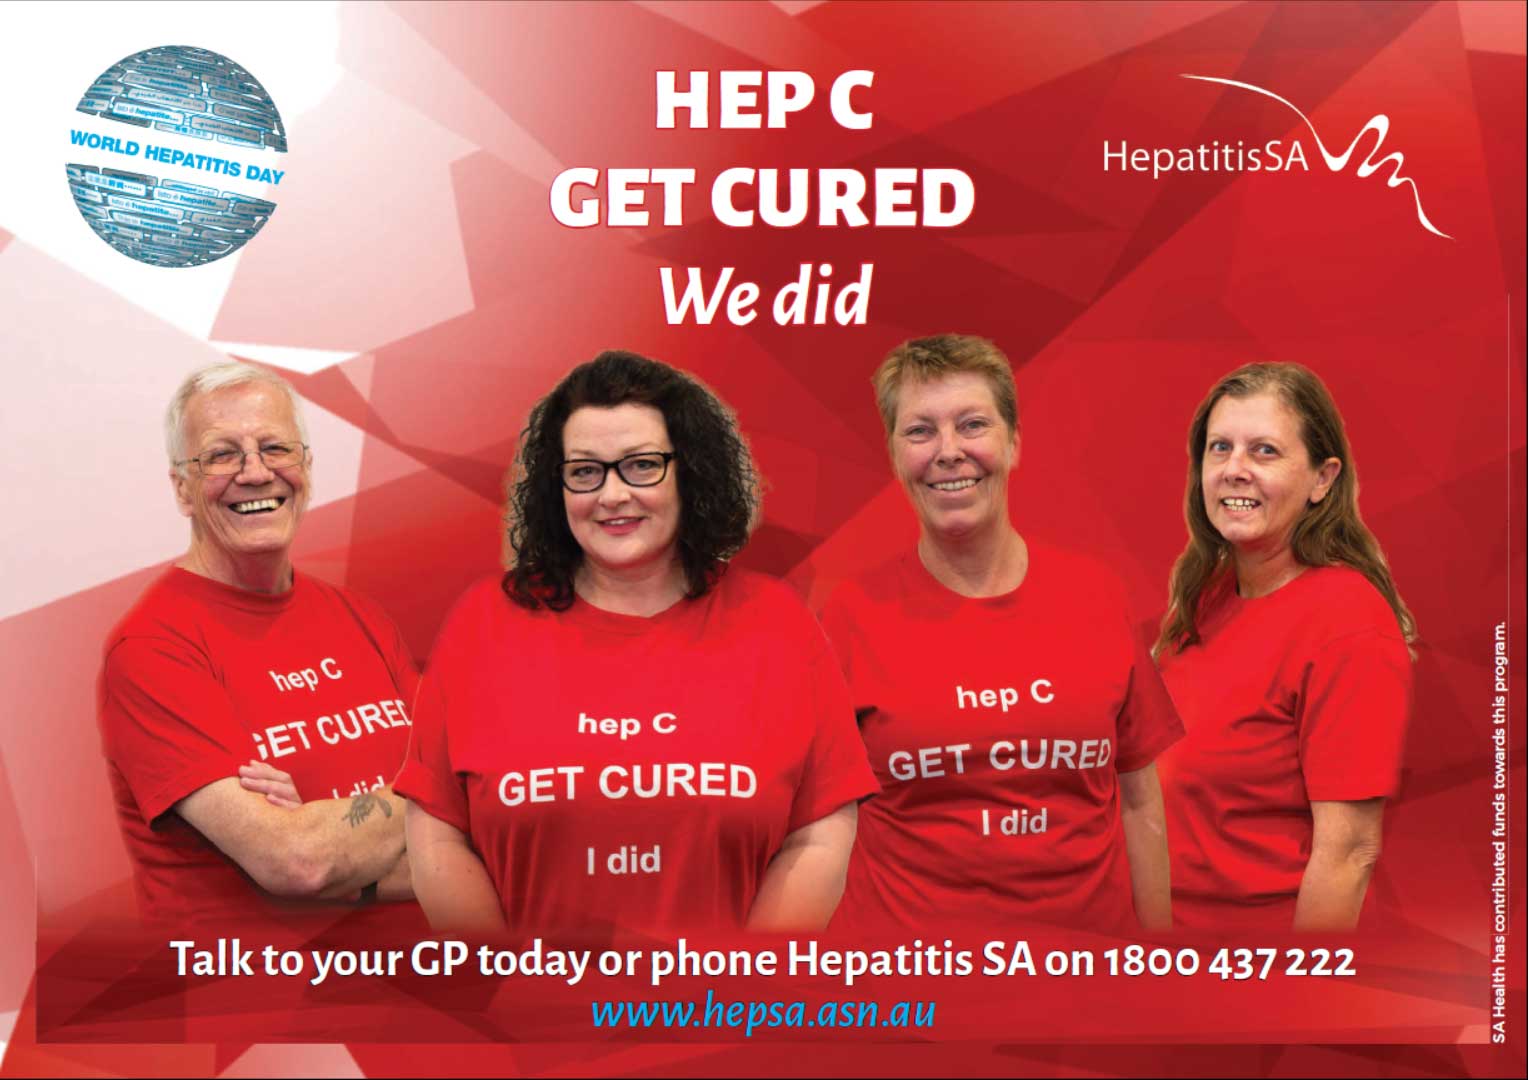 Hep C Get Cured poster